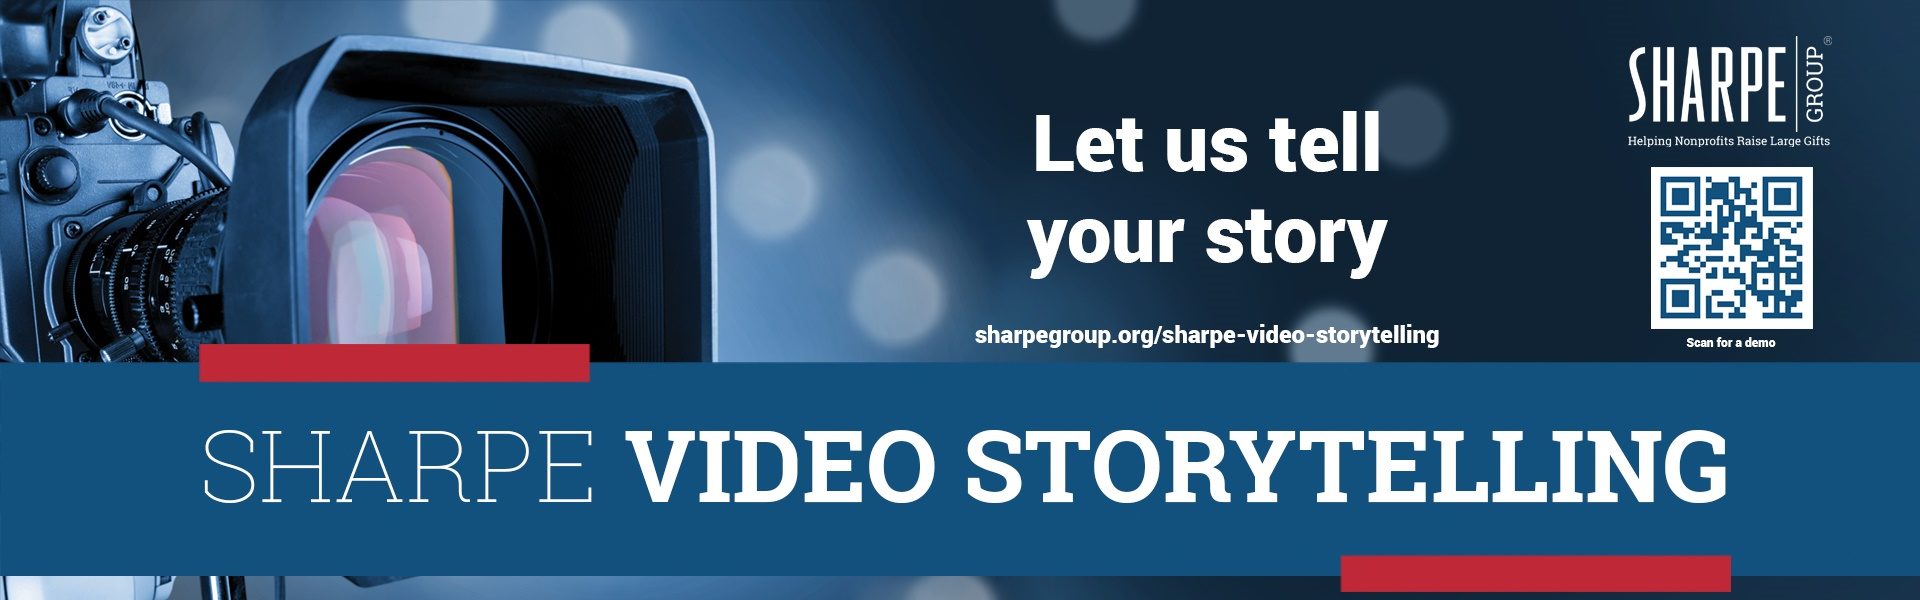 Sharpe Video Storytelling